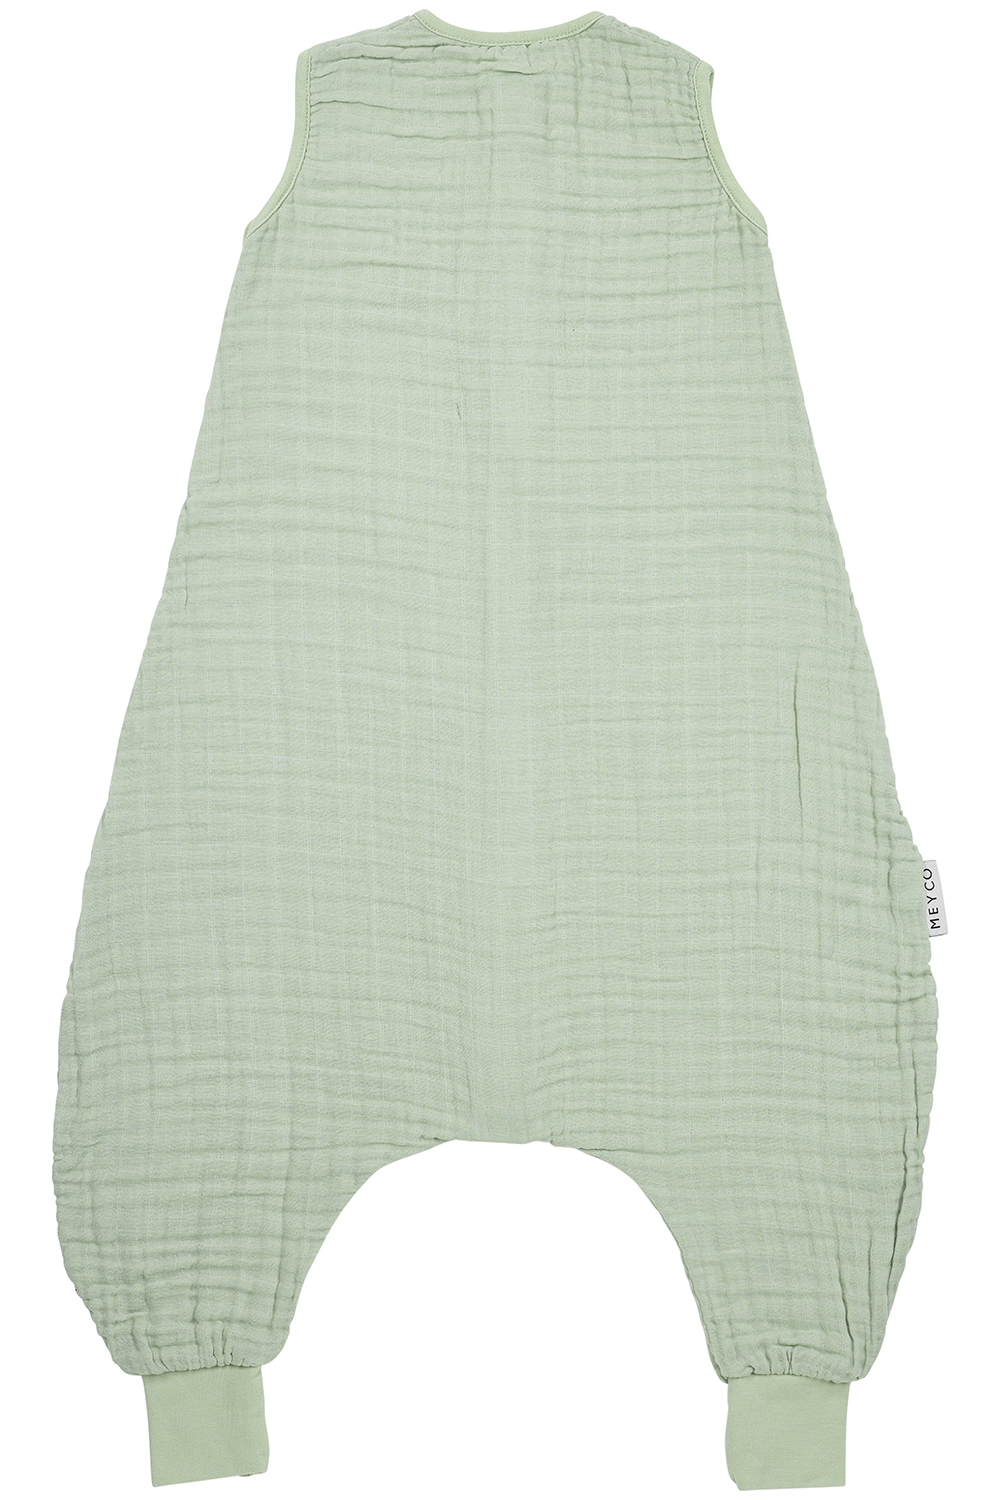 Baby zomer slaapoverall jumper pre-washed hydrofiel Uni - soft green - 80cm